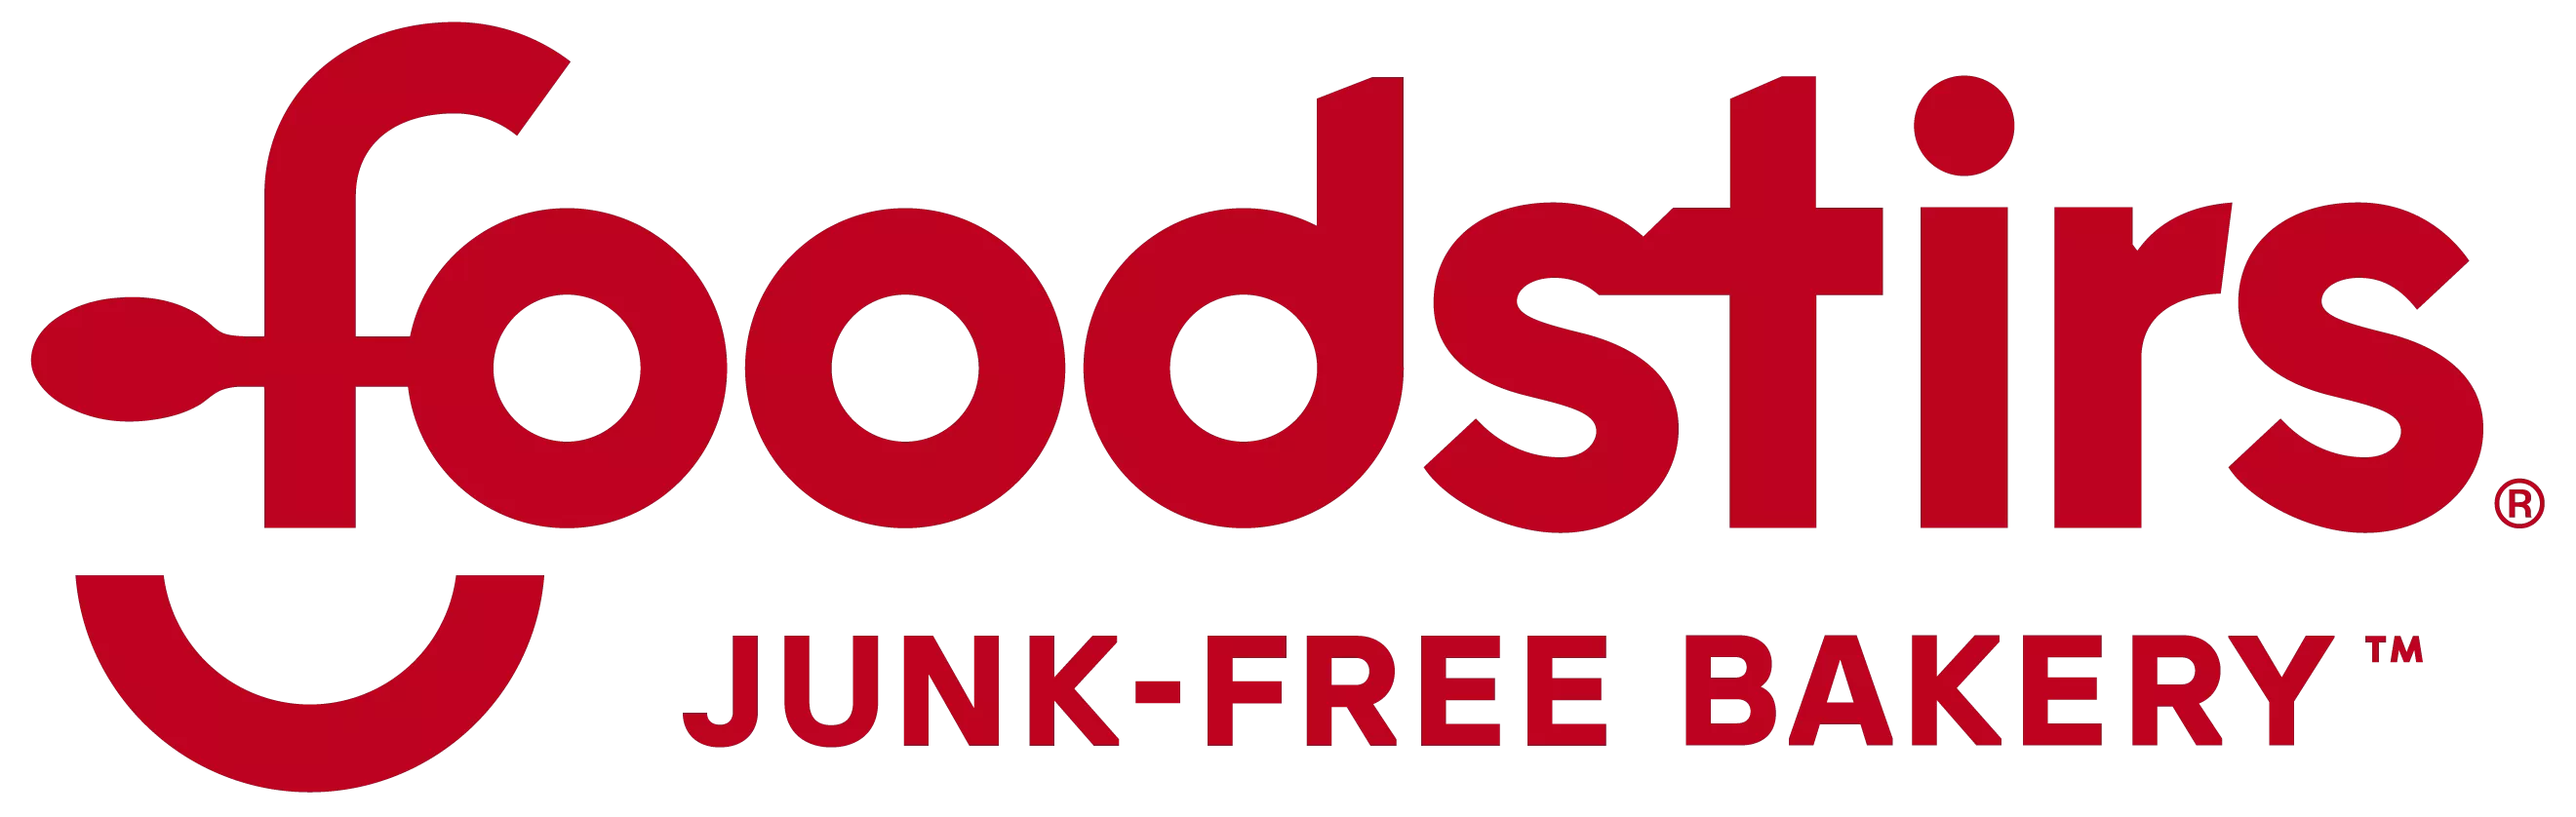 Foodstirs Logo